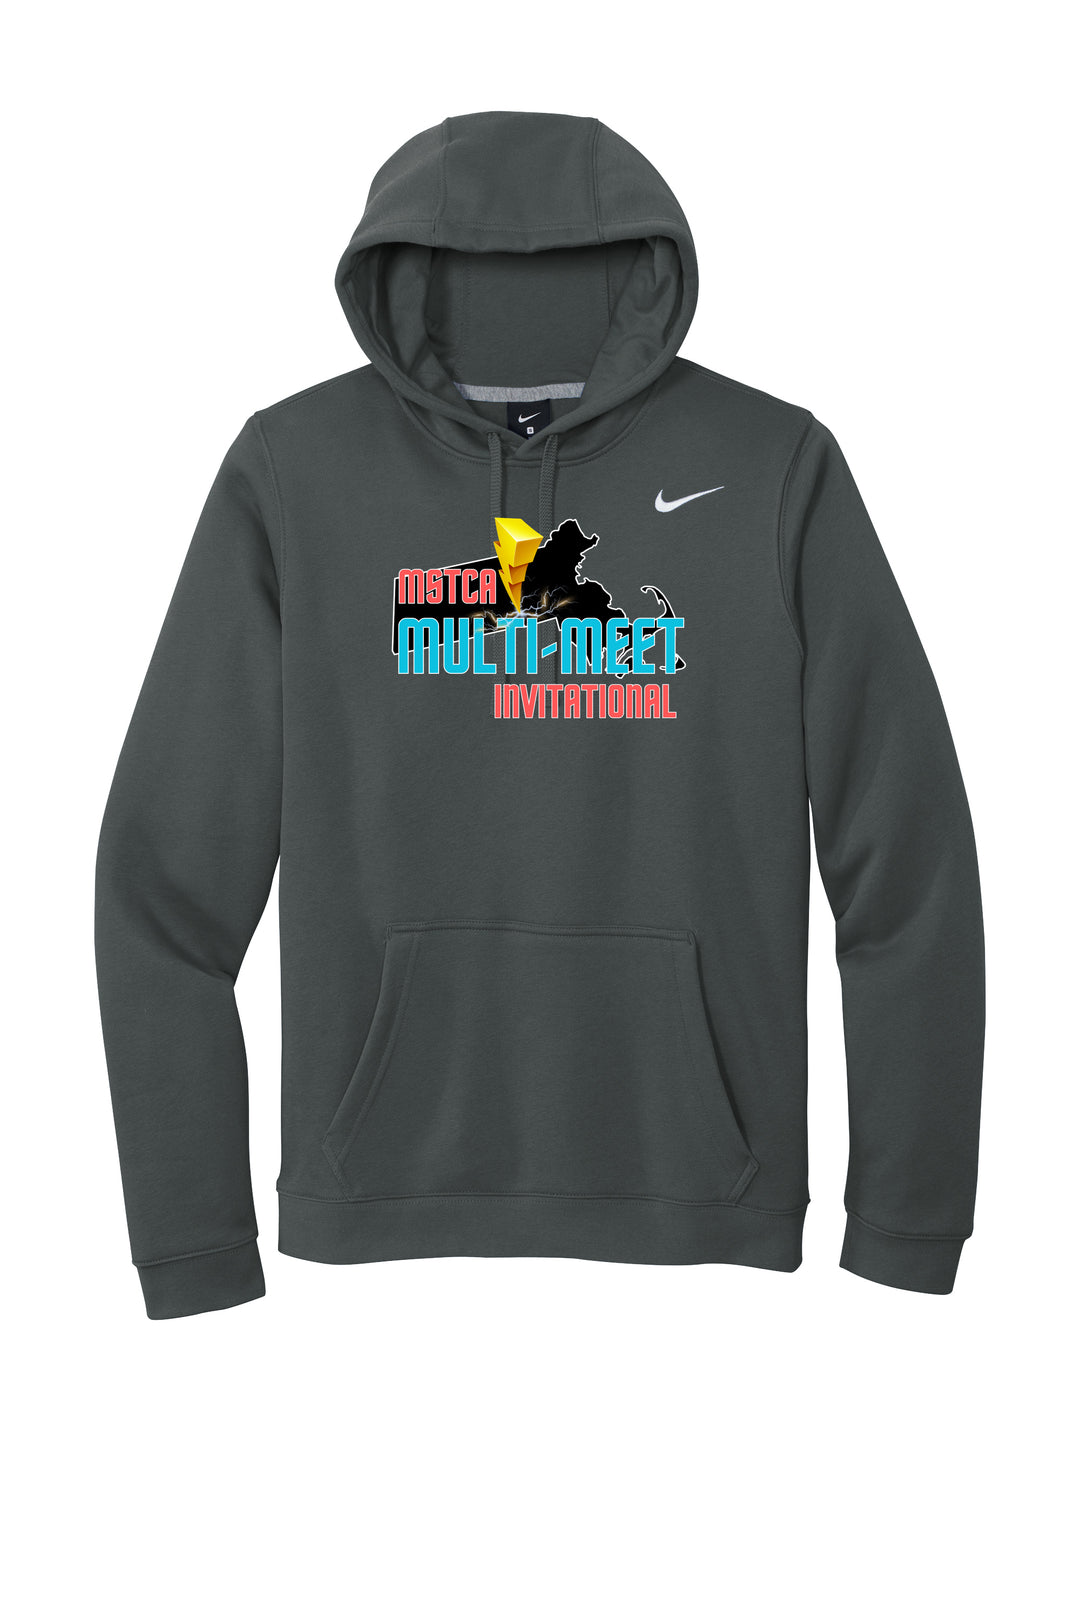 MSTCA Multi Fest Meet - Nike Club Fleece Pullover Hoodie - CJ1611